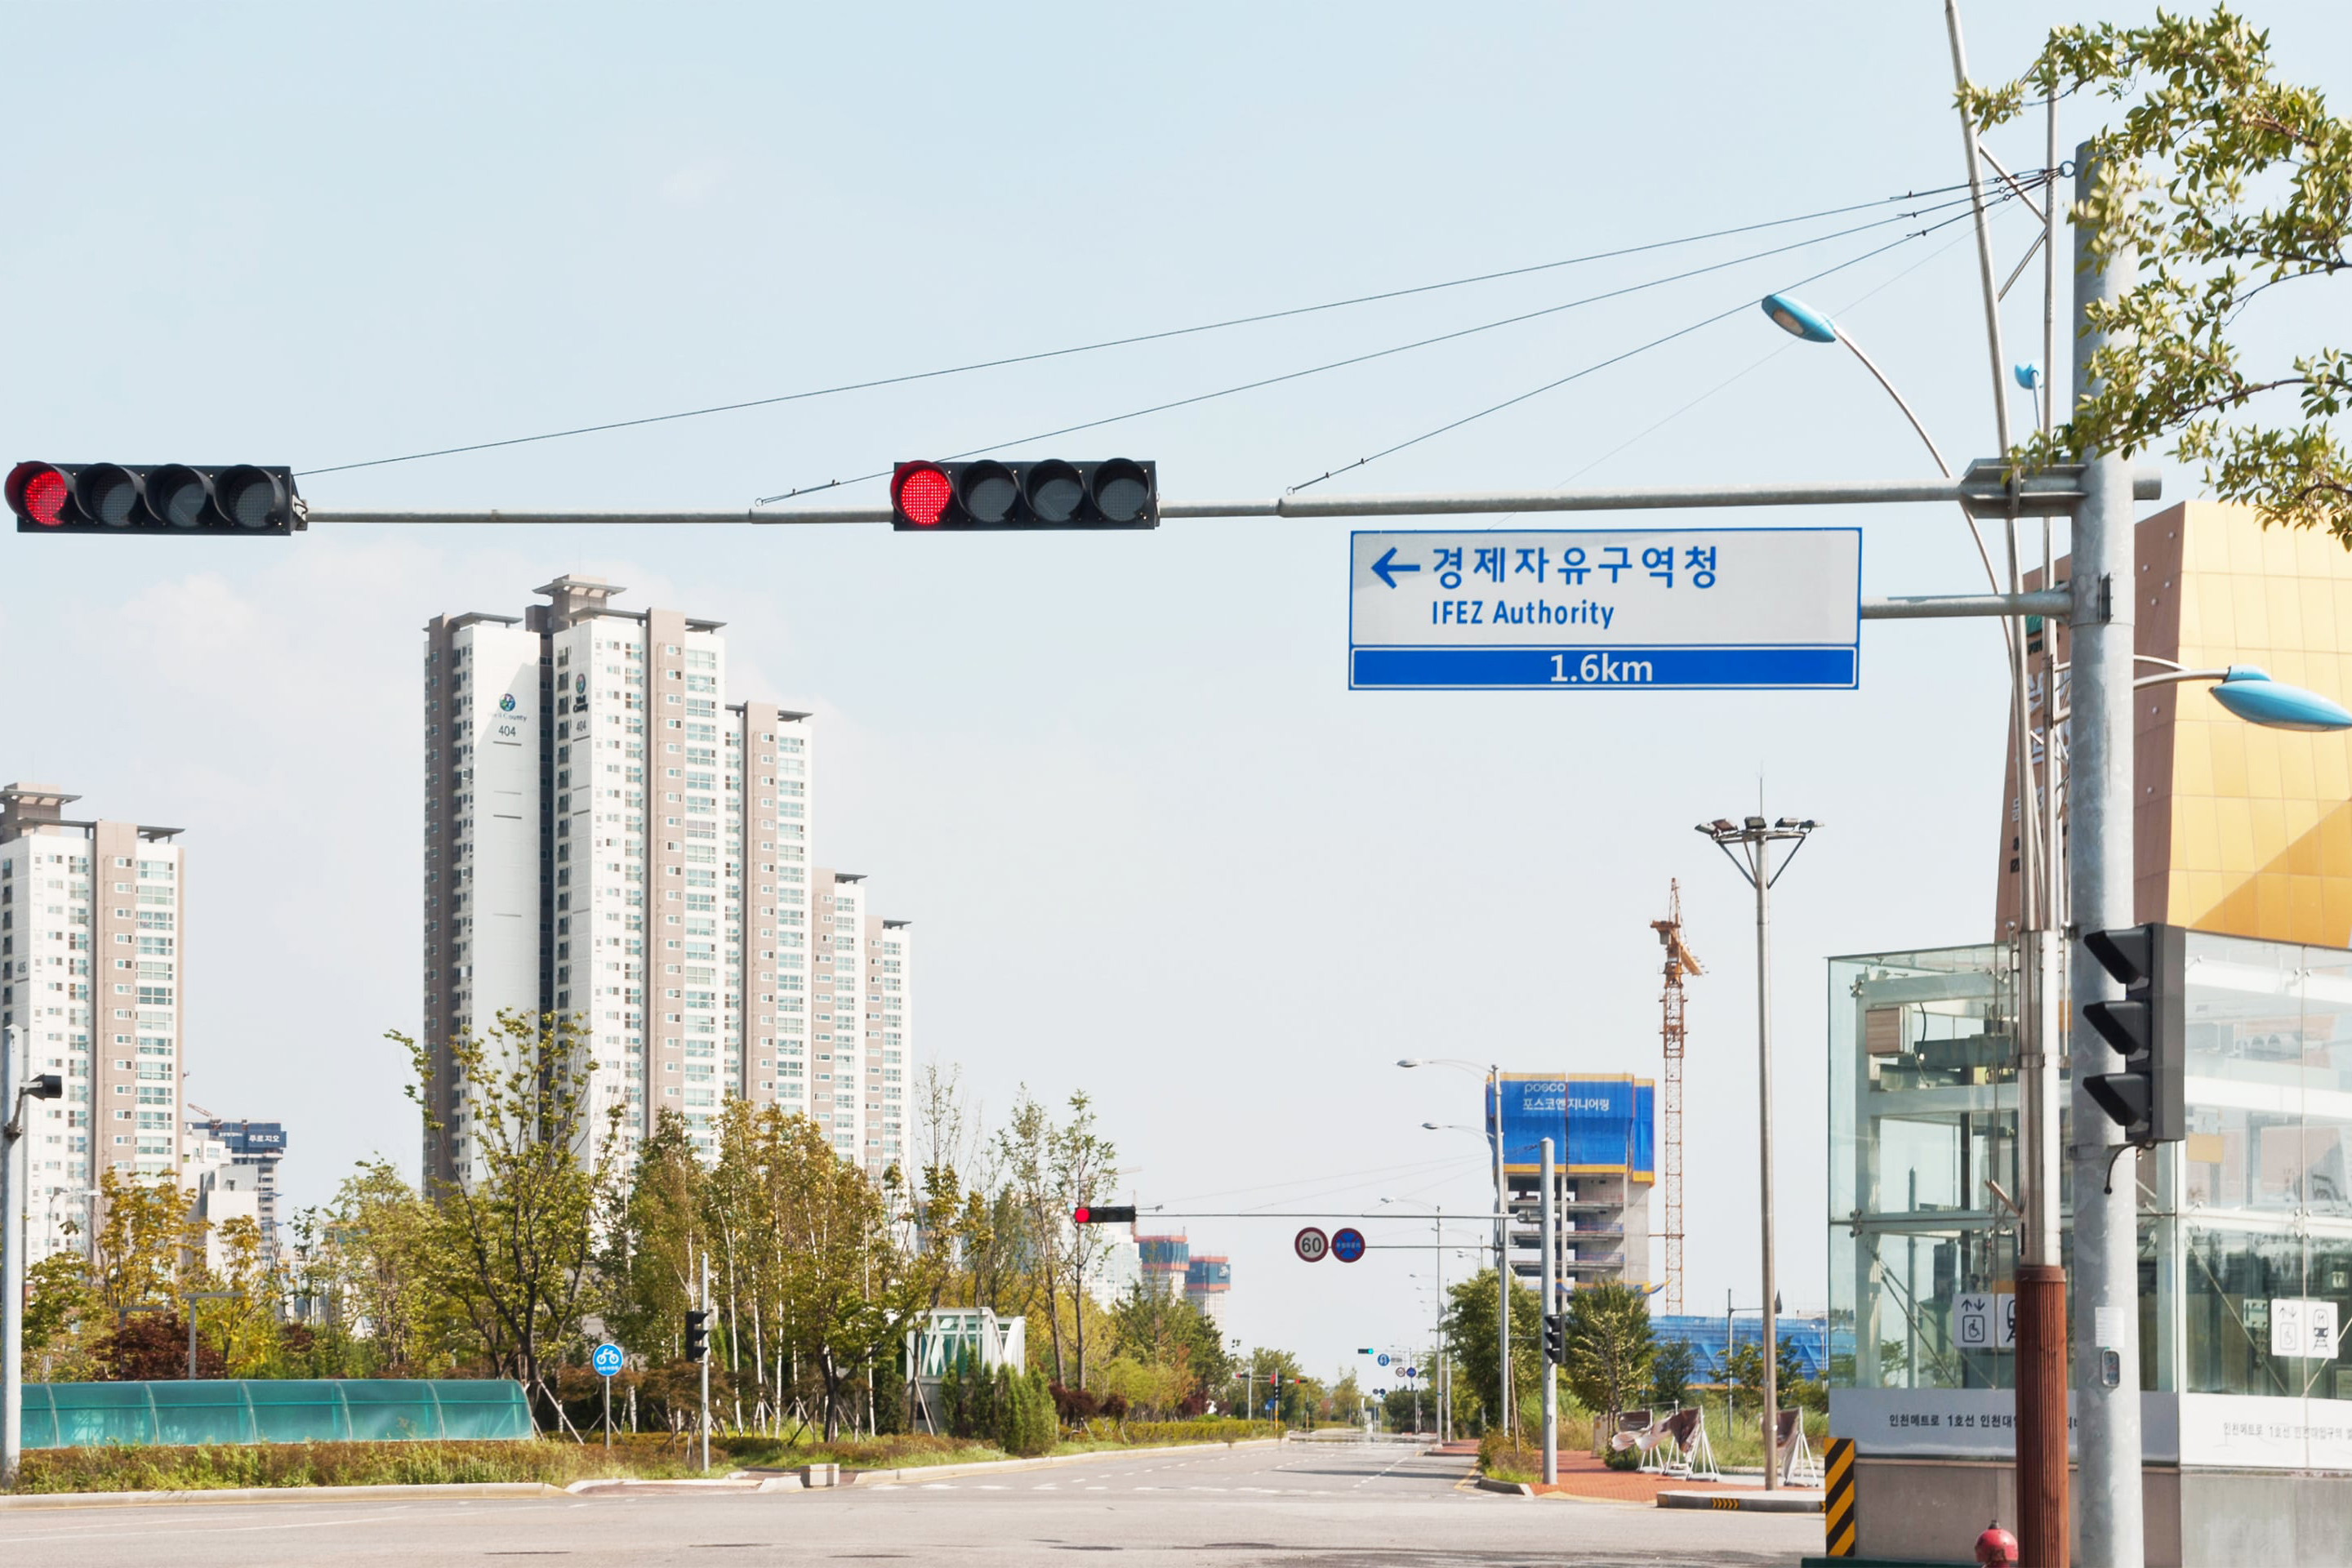 studio dumbar design South Korean road signage in use